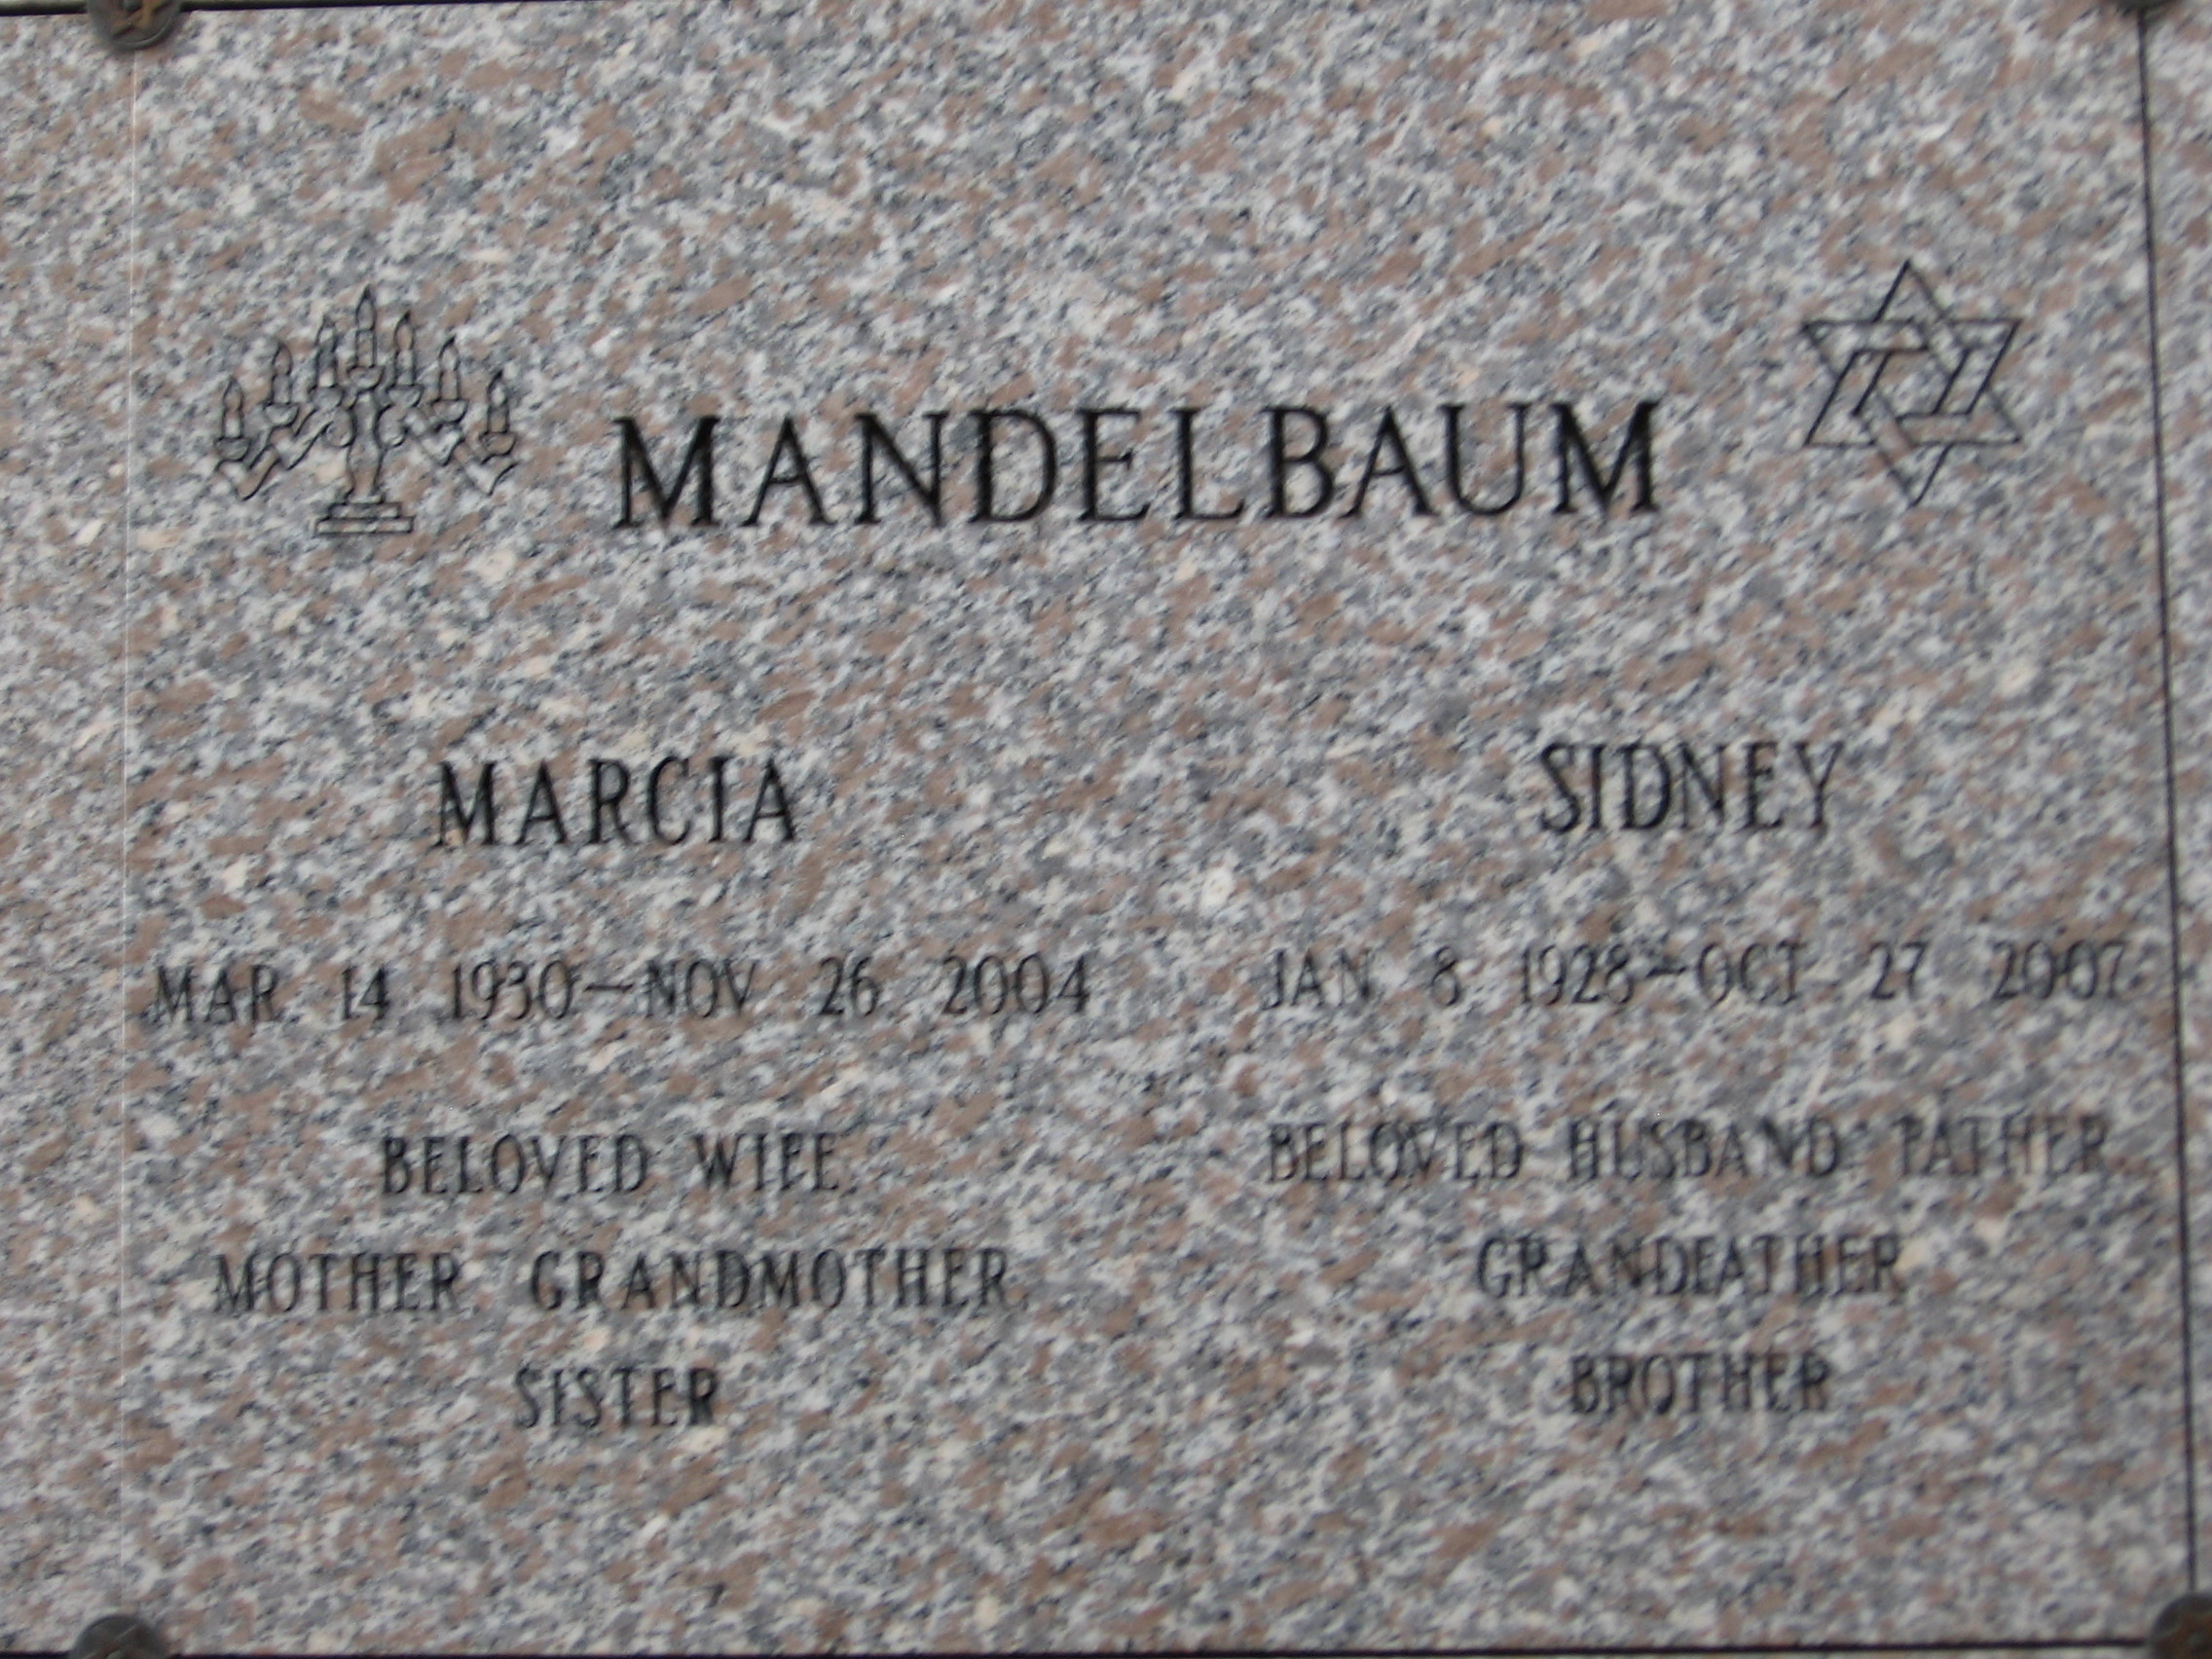 Sidney Mandelbaum